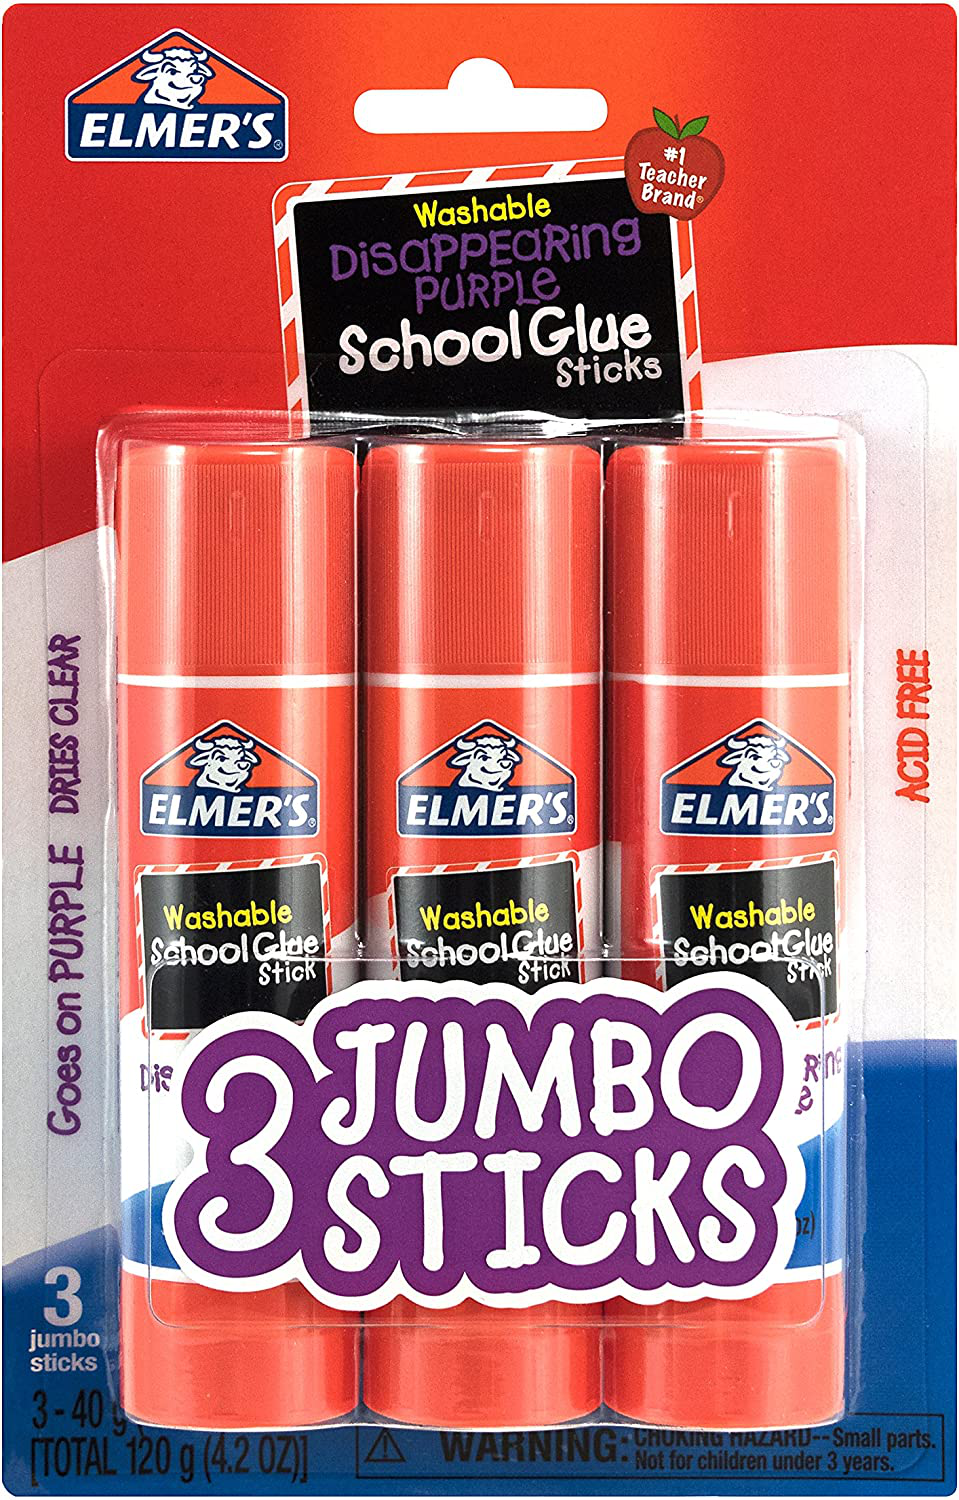 Elmer's Disappearing Purple School Glue Stick, 0.77 oz, Single or Multi Packs